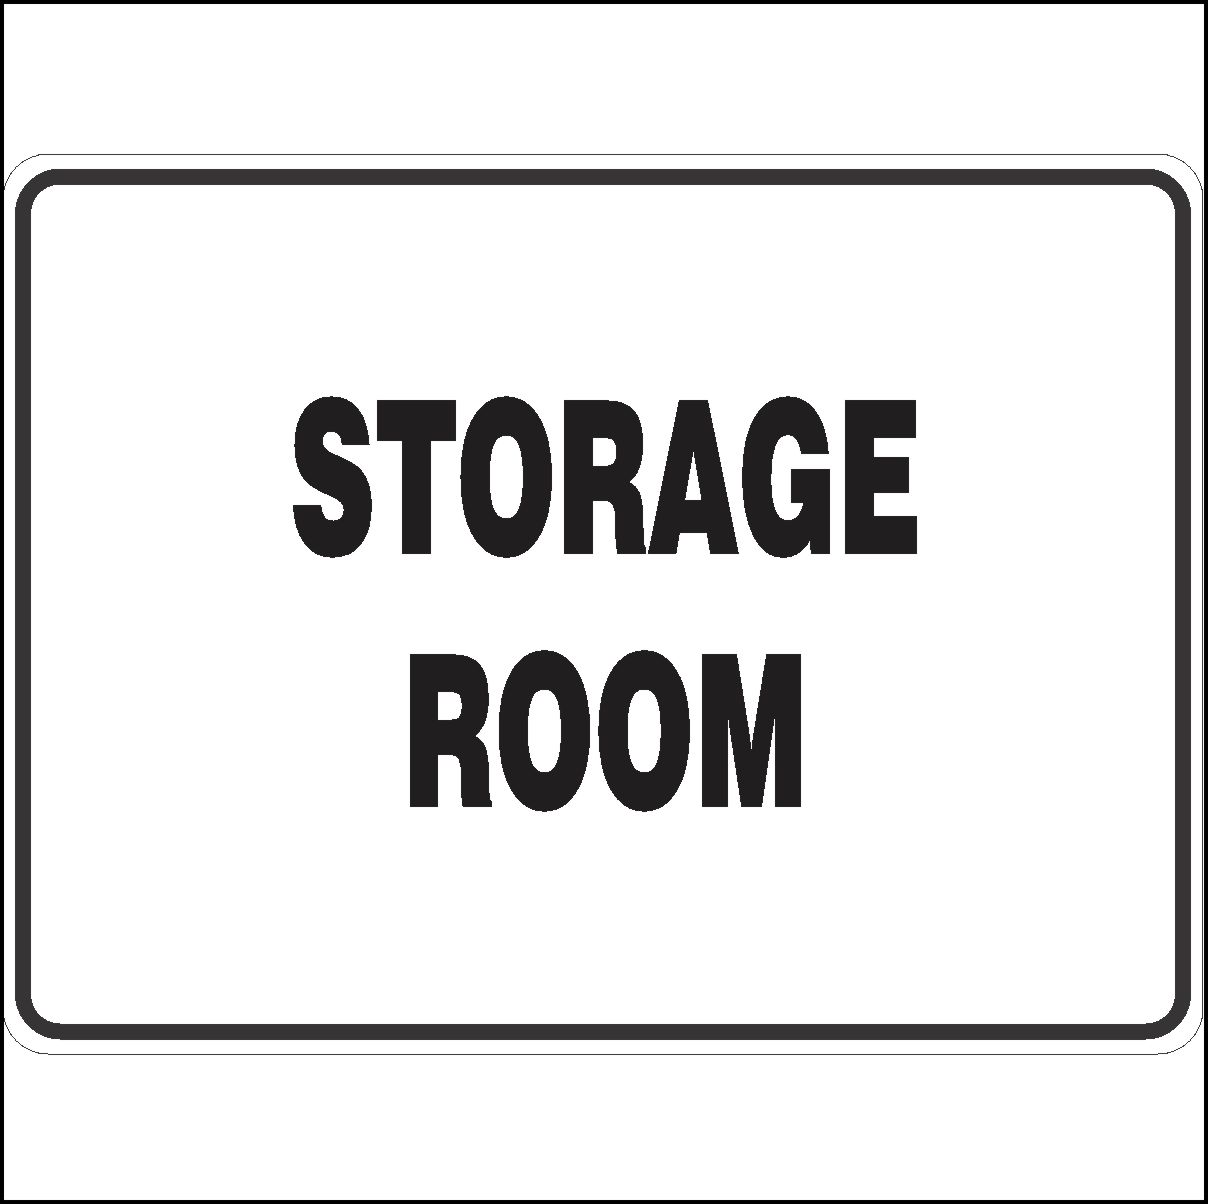 Storage Room - Safety Sign